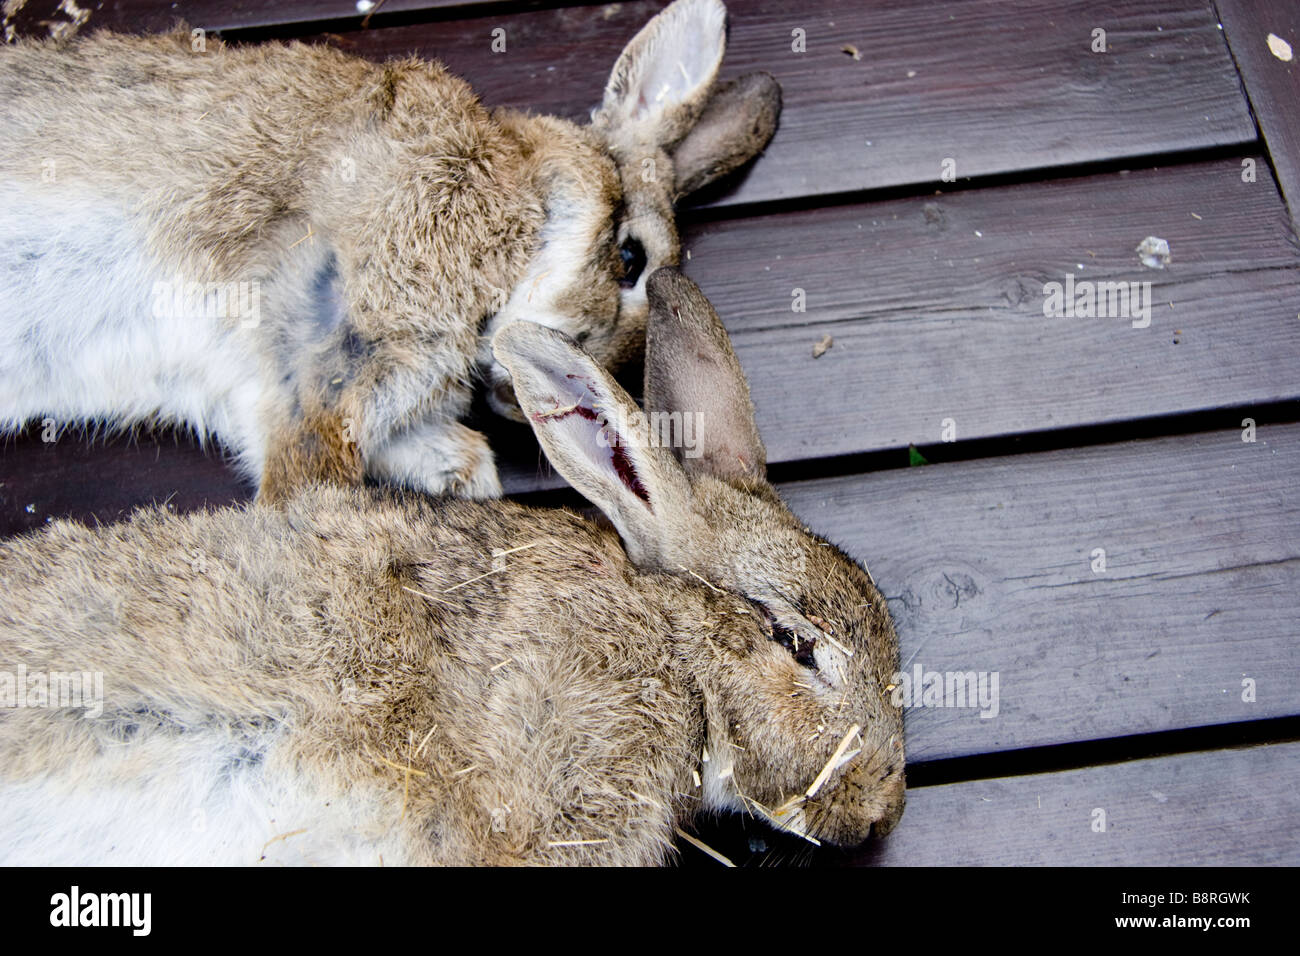 Dead Rabbits LC (@deadrabbitslc) • Instagram photos and videos